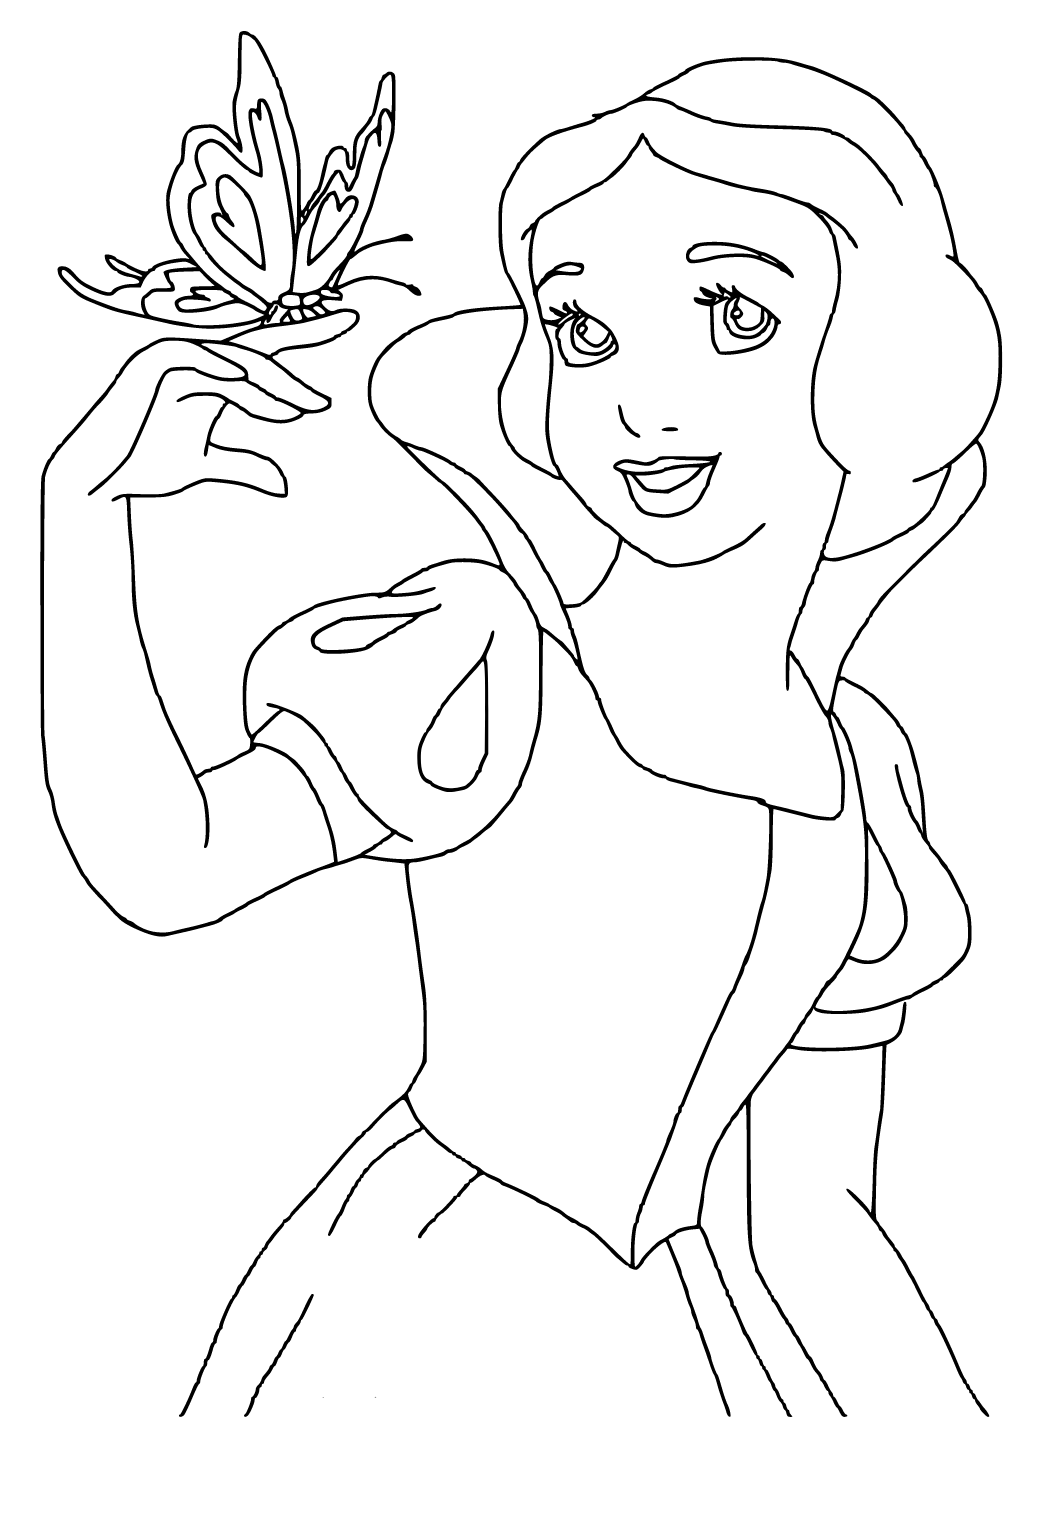 Disney Princess Belle,Snow white,Cinderella,Aurora, Ariel and Jasmine  Coloring Page fun for kids 